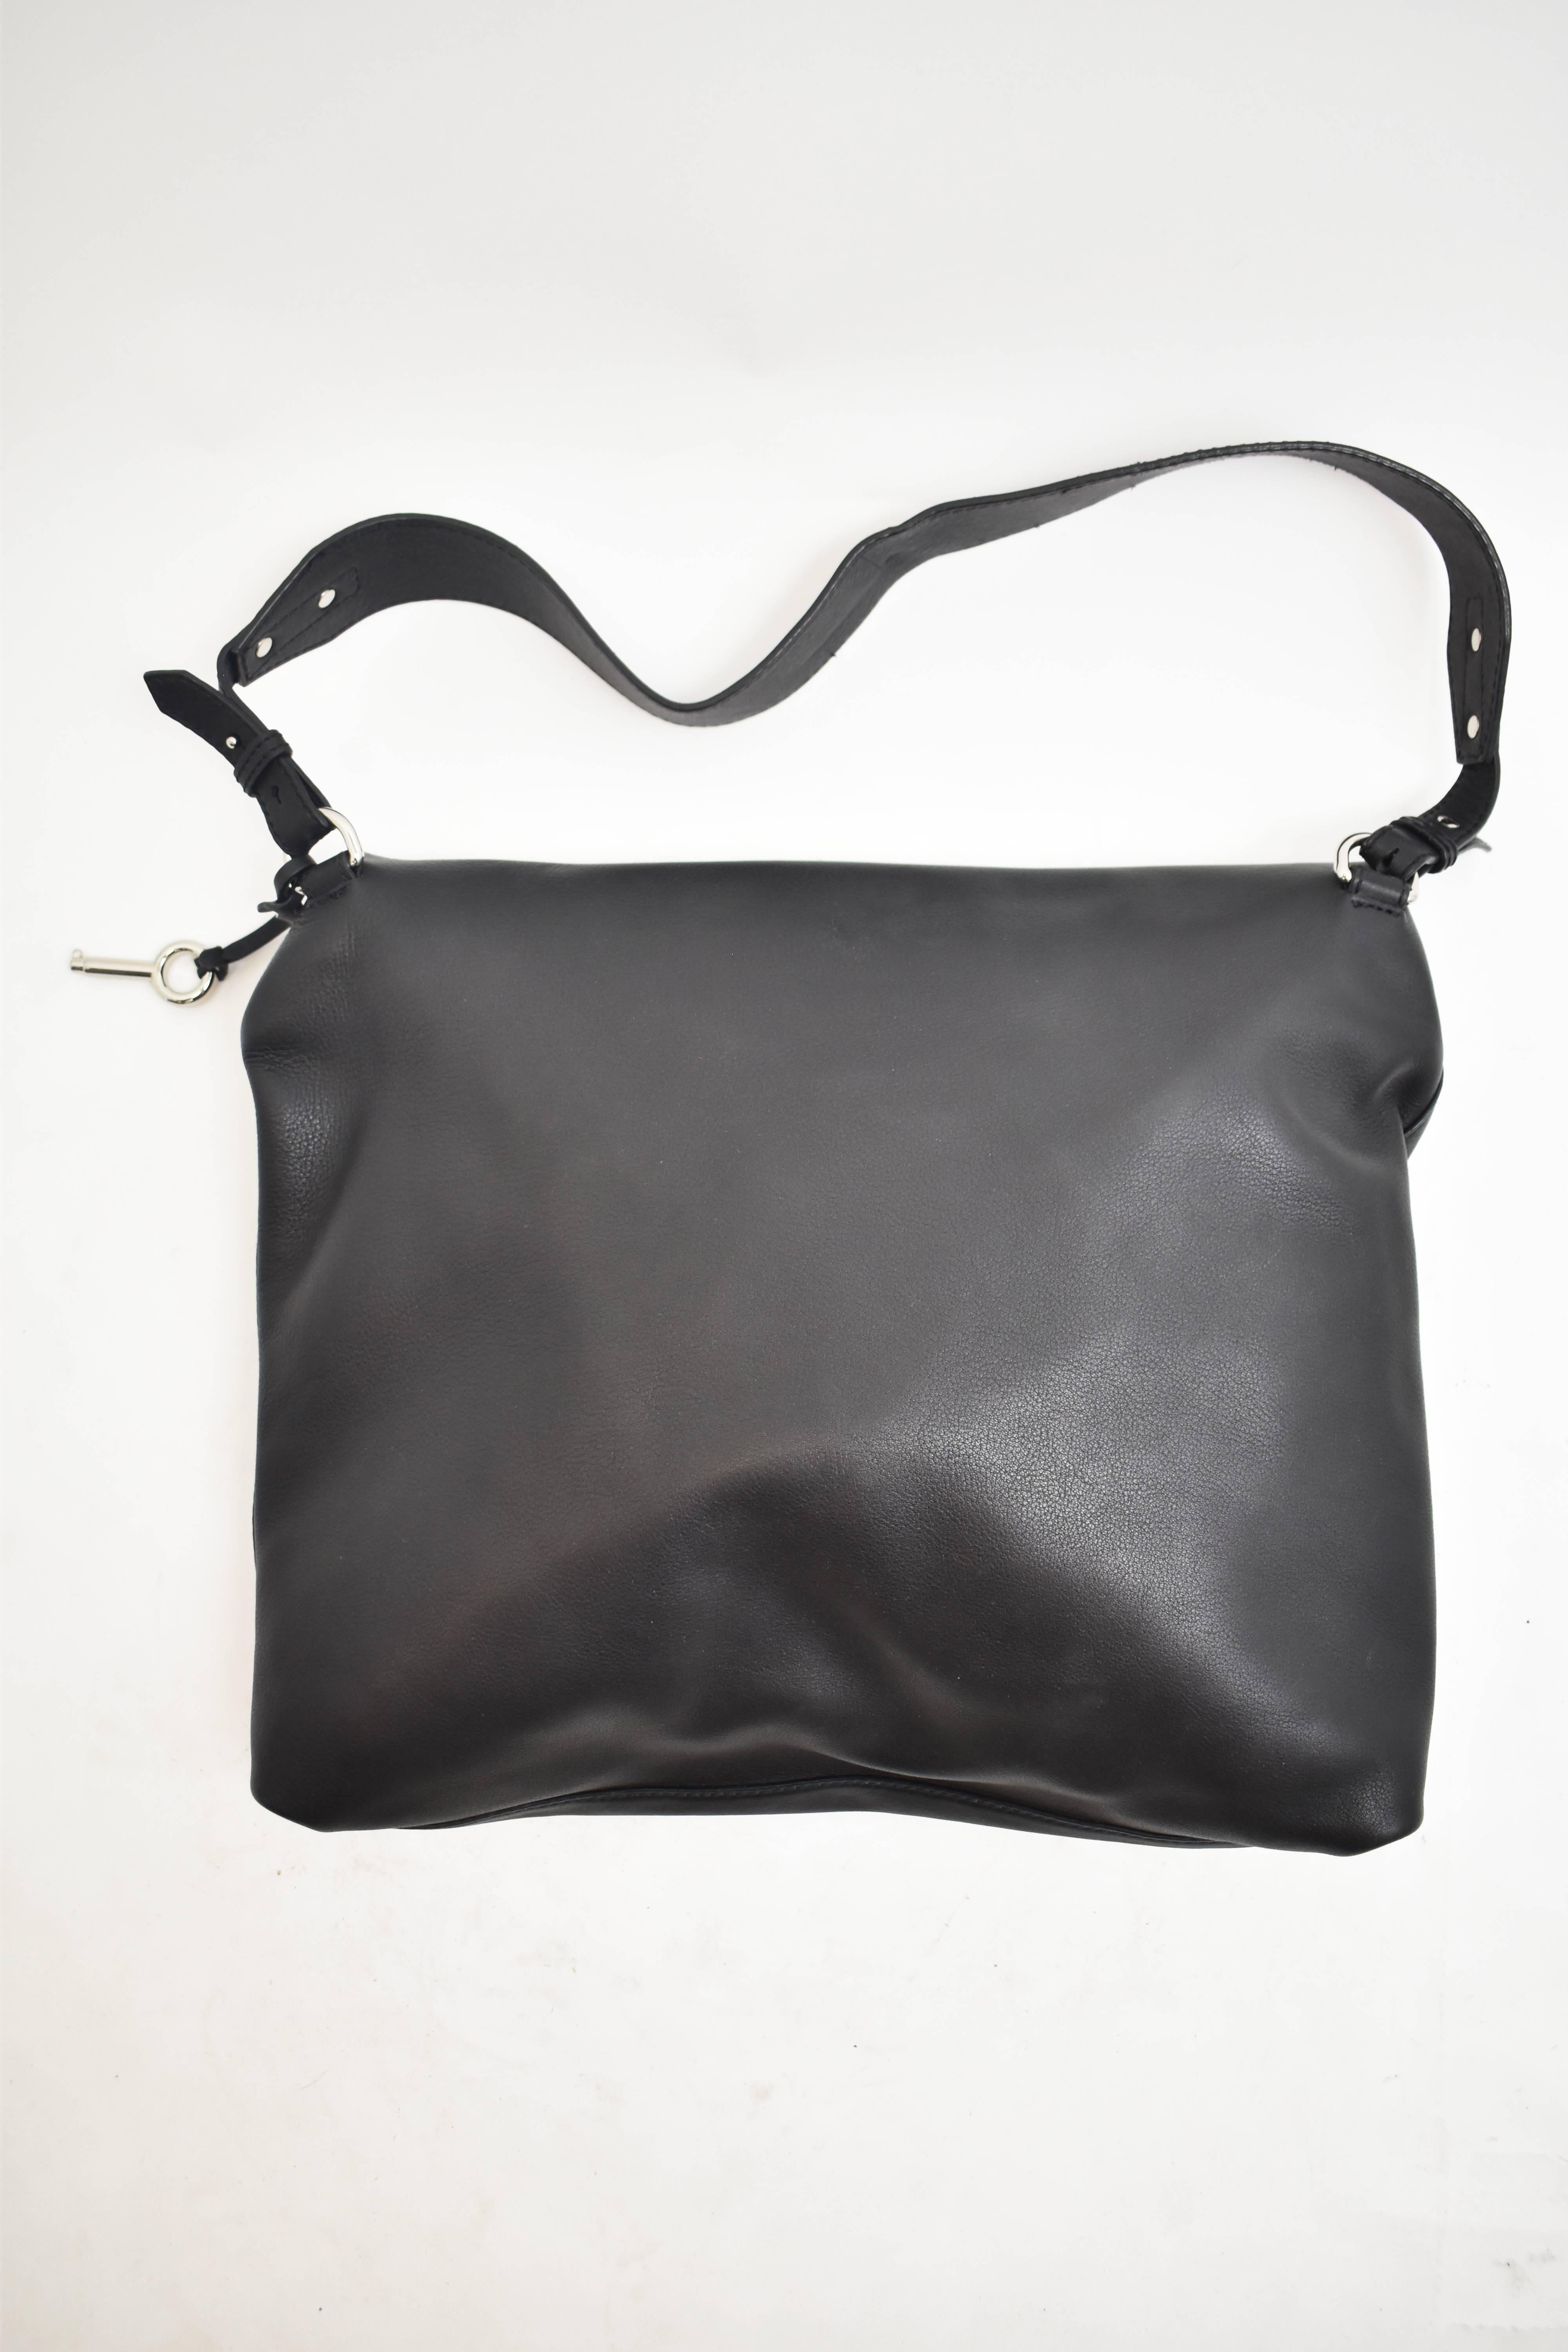 black leather handbag with silver hardware